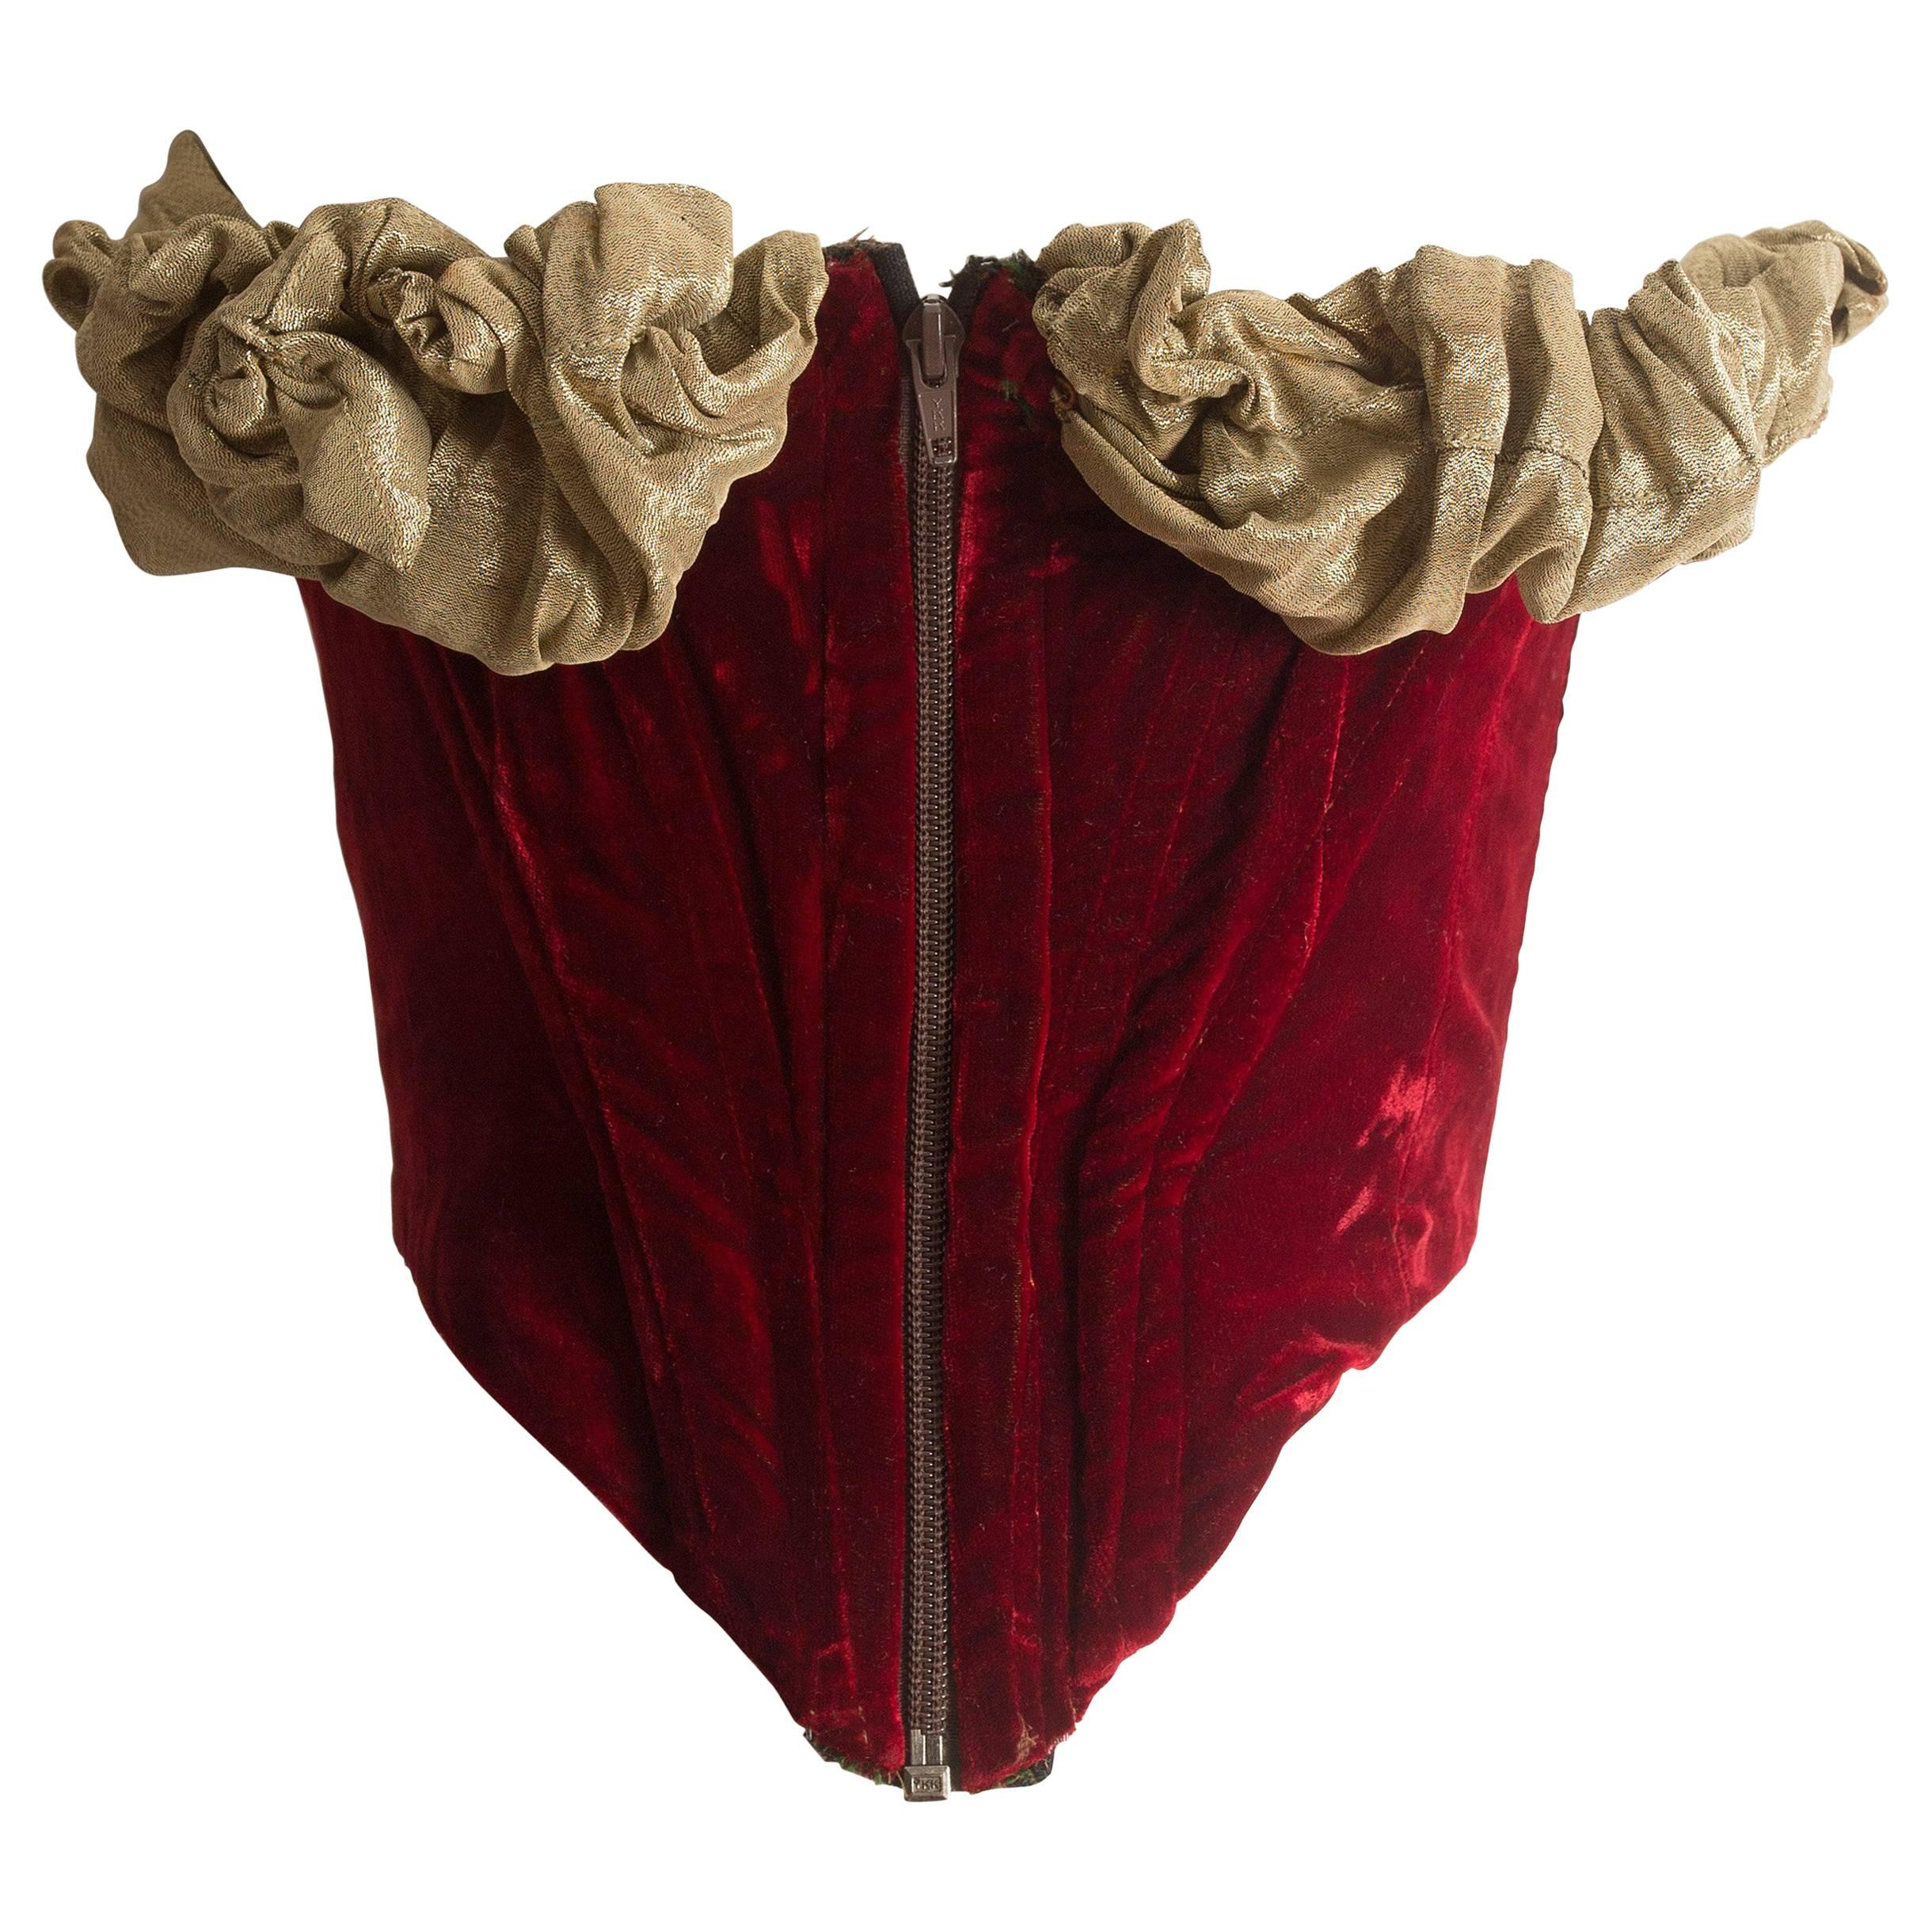 Vivienne Westwood red velvet ‘Voyage to Cythera’ corset, circa 1989